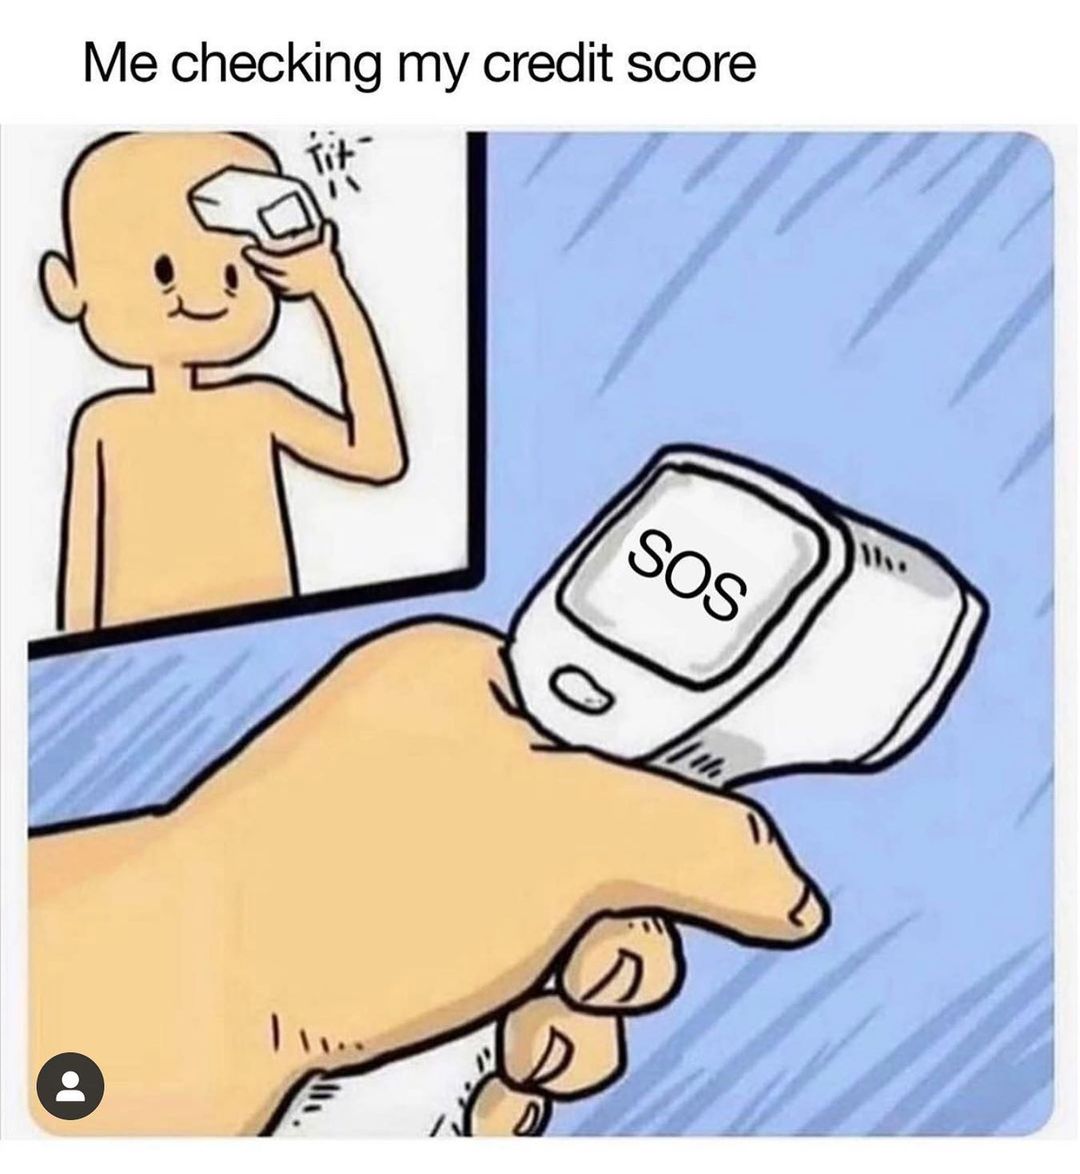 Me checking my credit score. SOS.